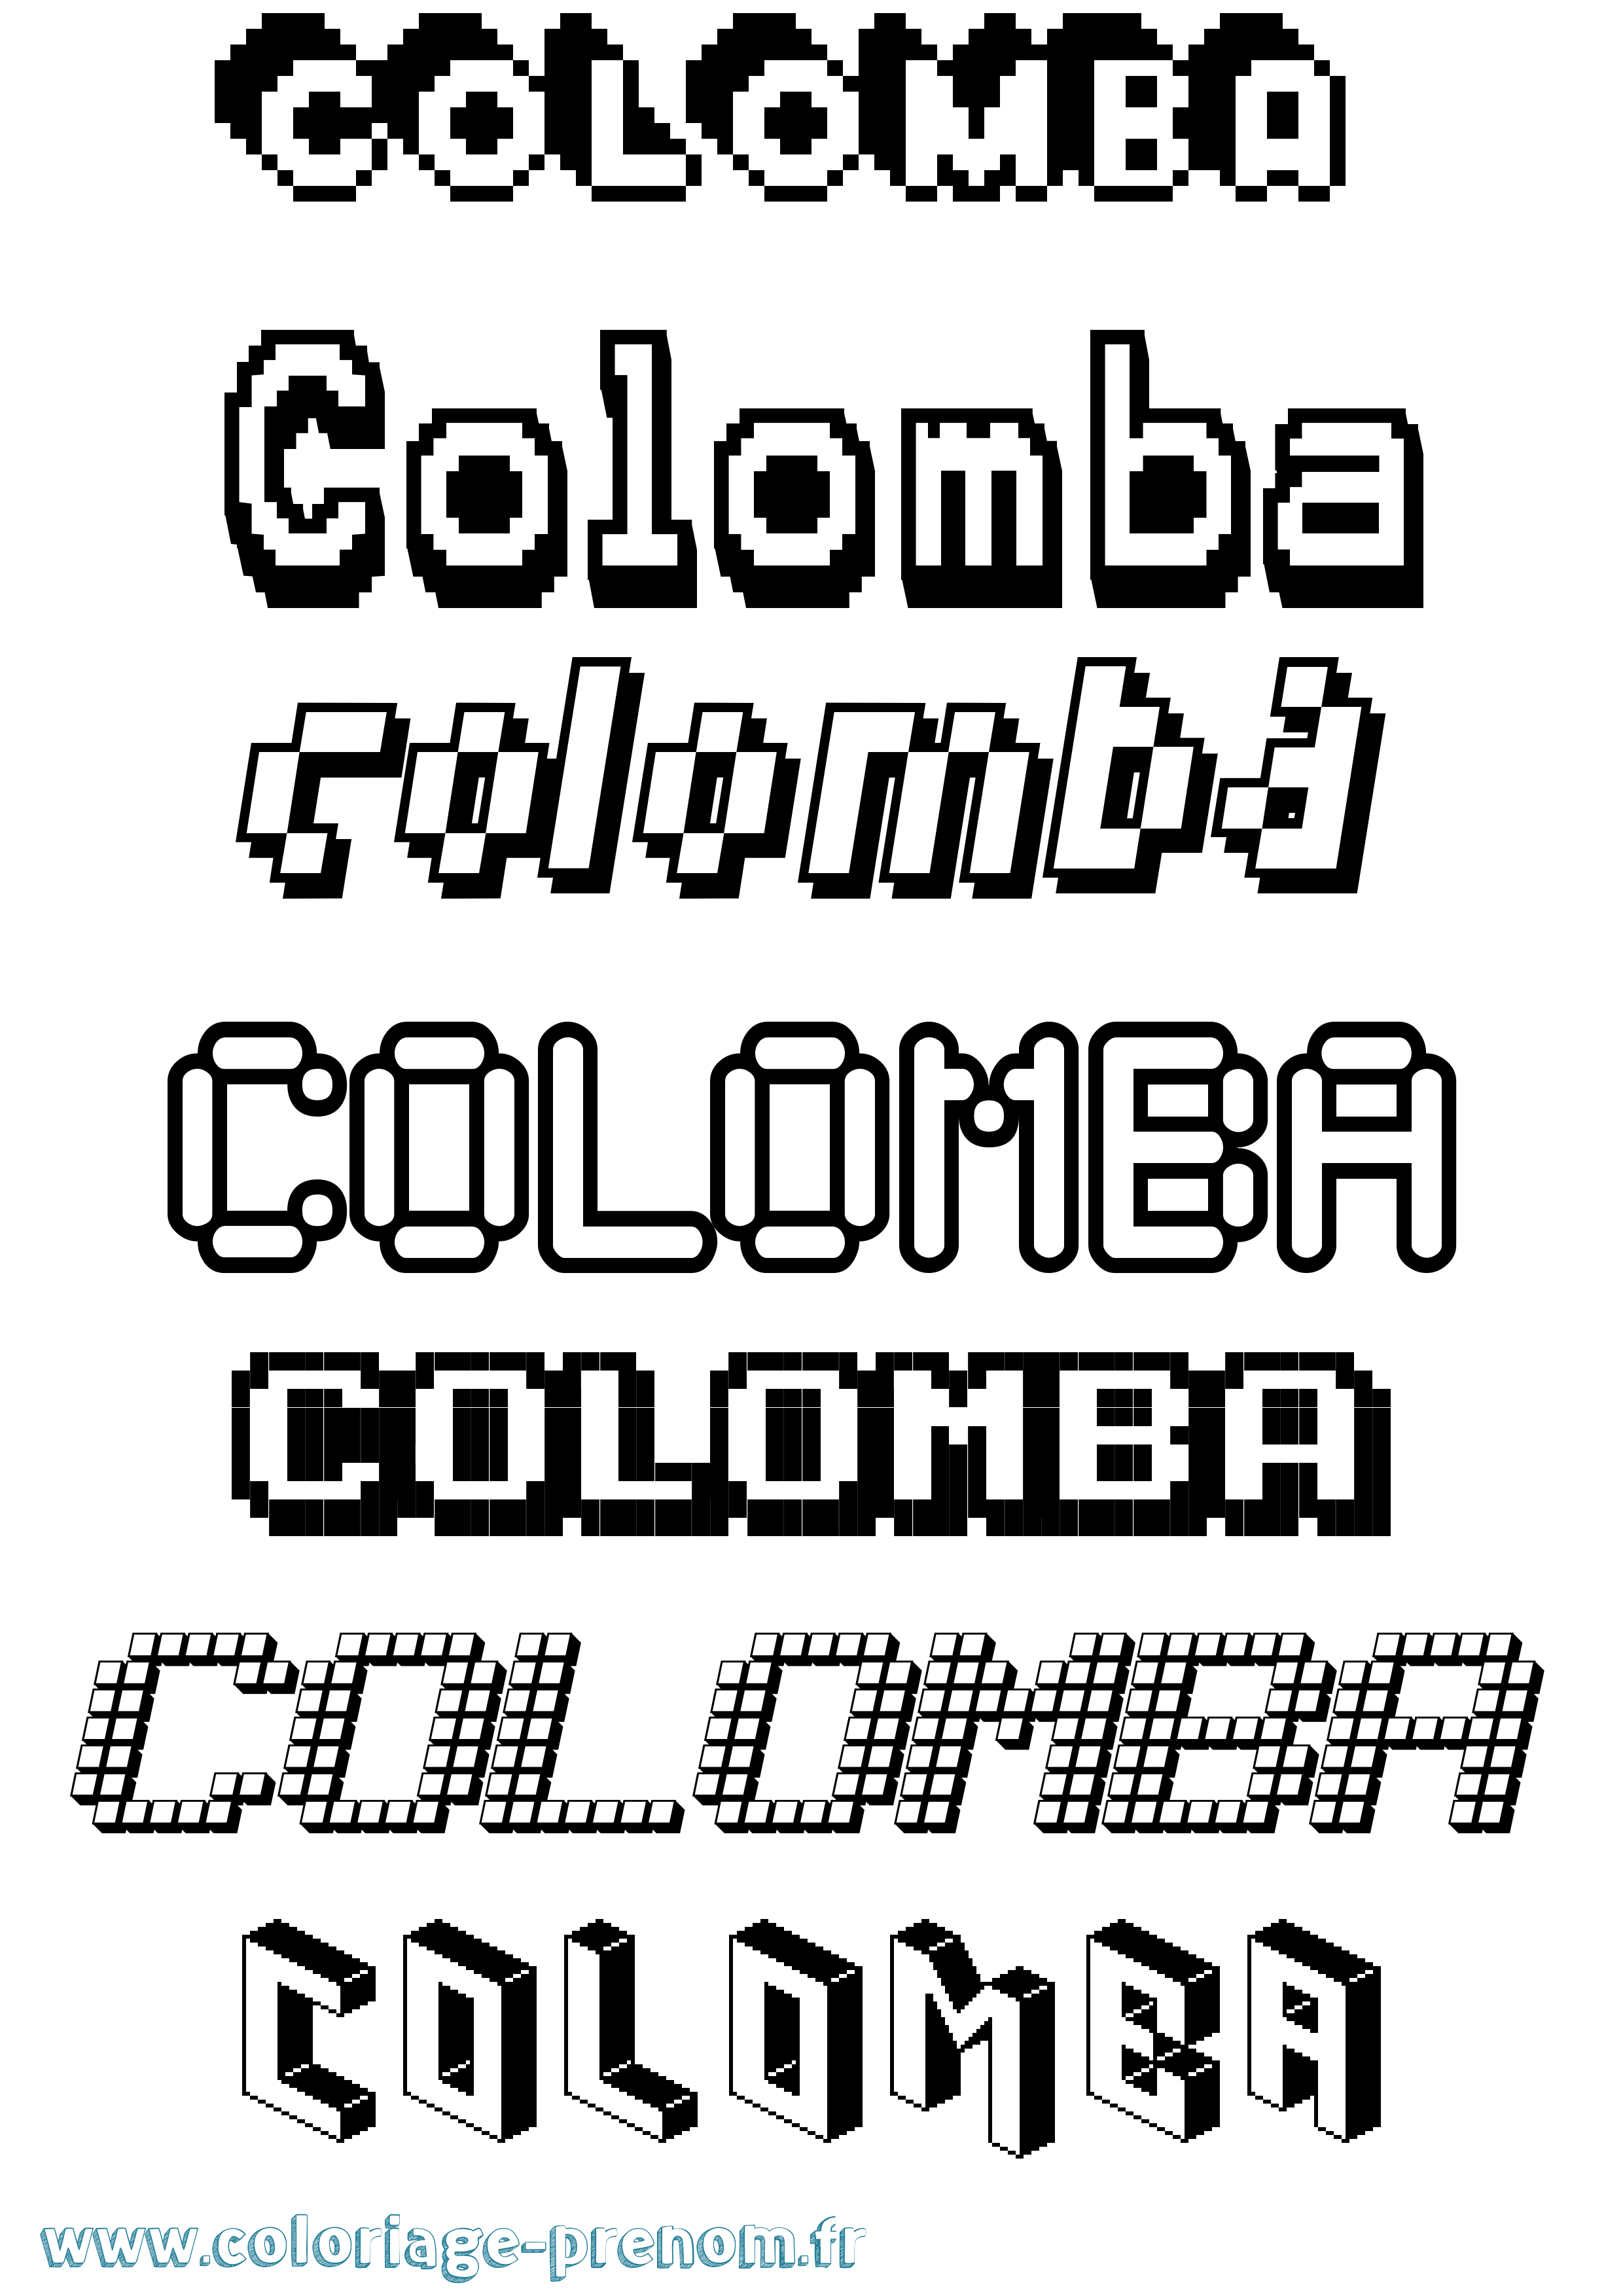 Coloriage prénom Colomba Pixel